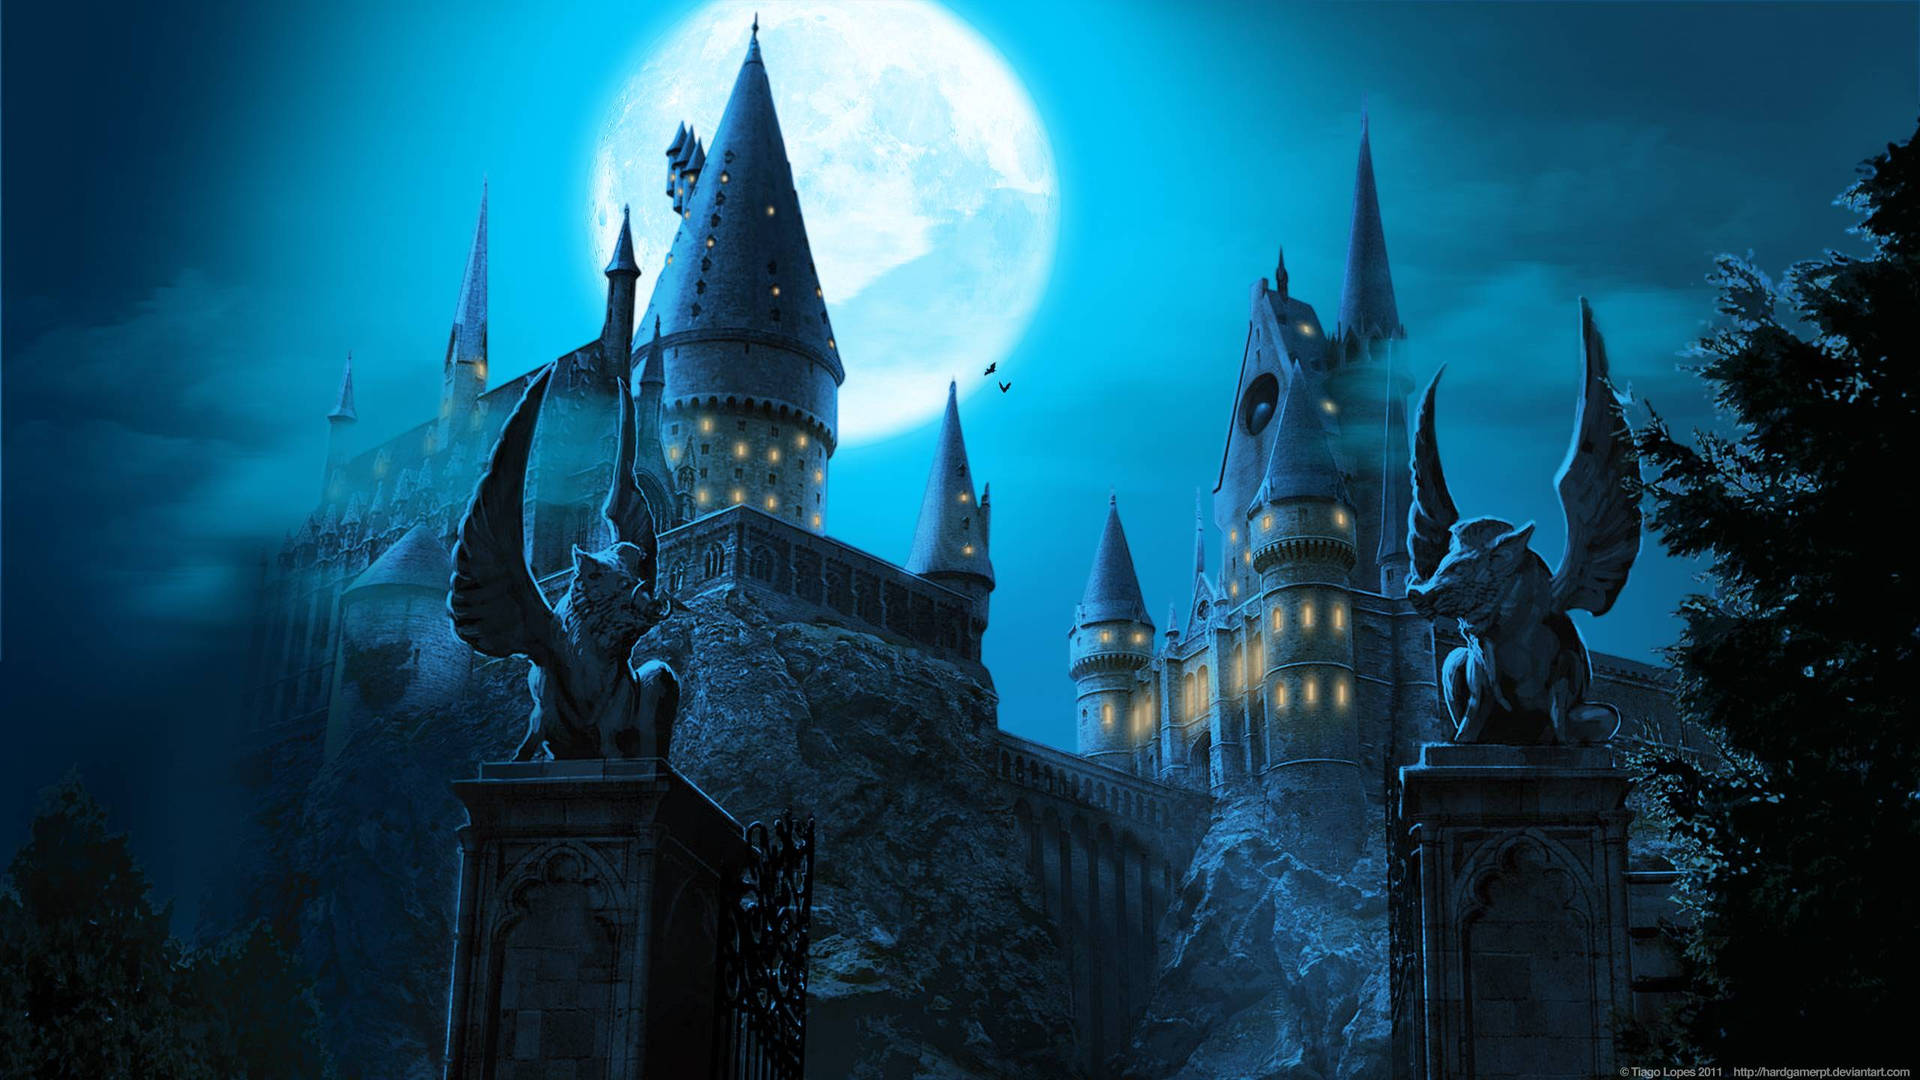 Spooky-themed Hogwarts Castle